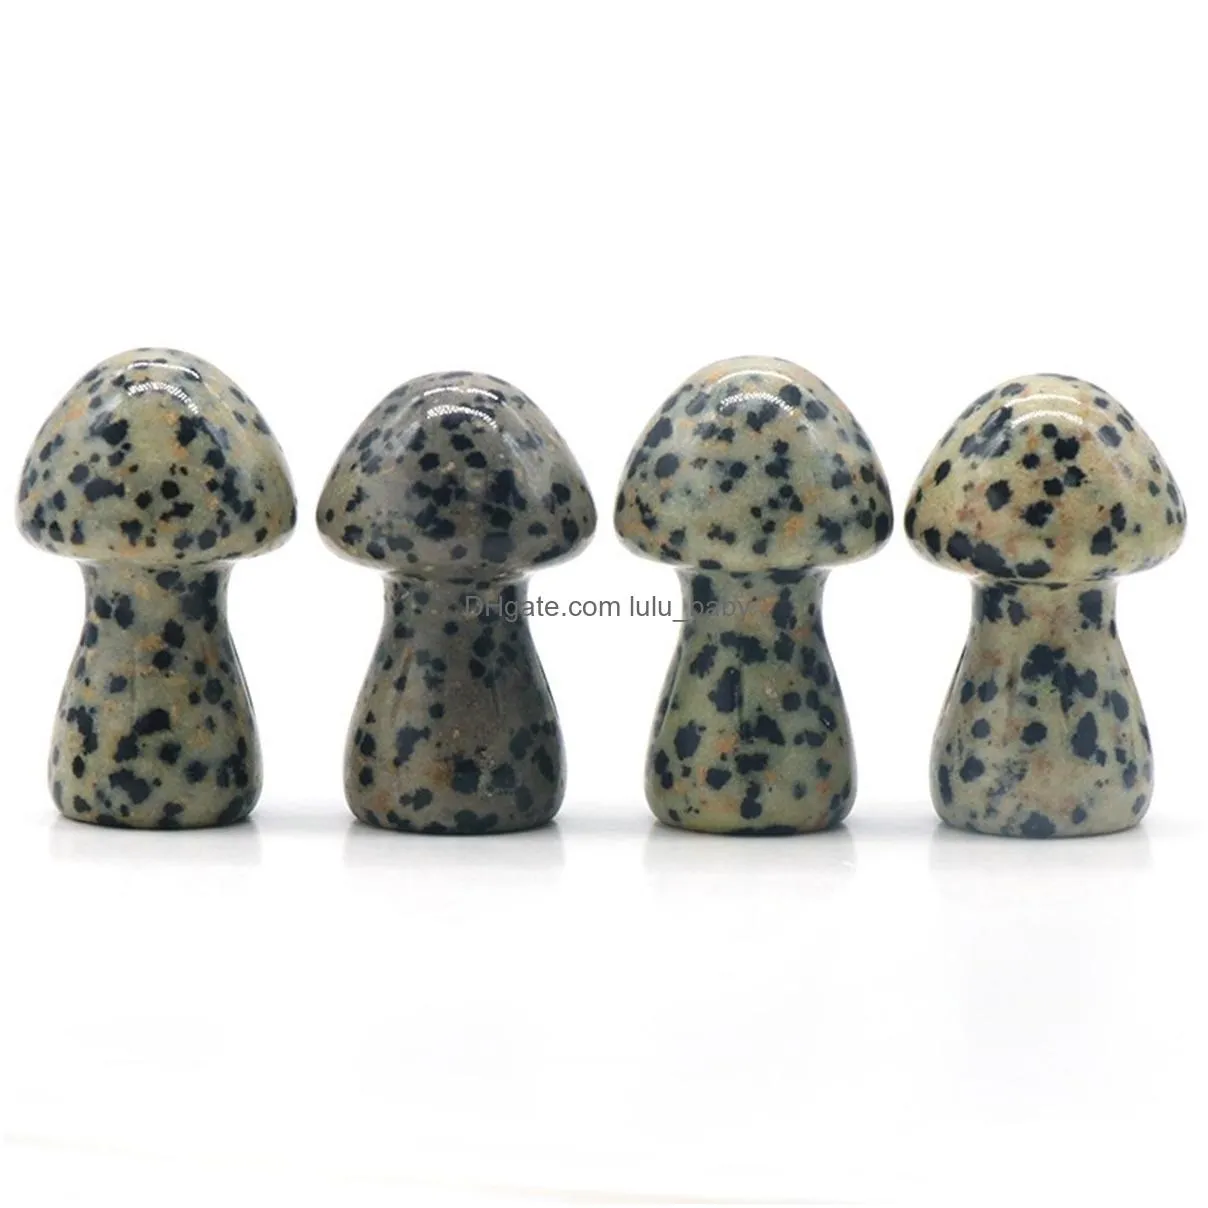 35mm unakite gemstone sculpture decor carving mushroom polished cute mushroom stones for home garden lawn yard decoration